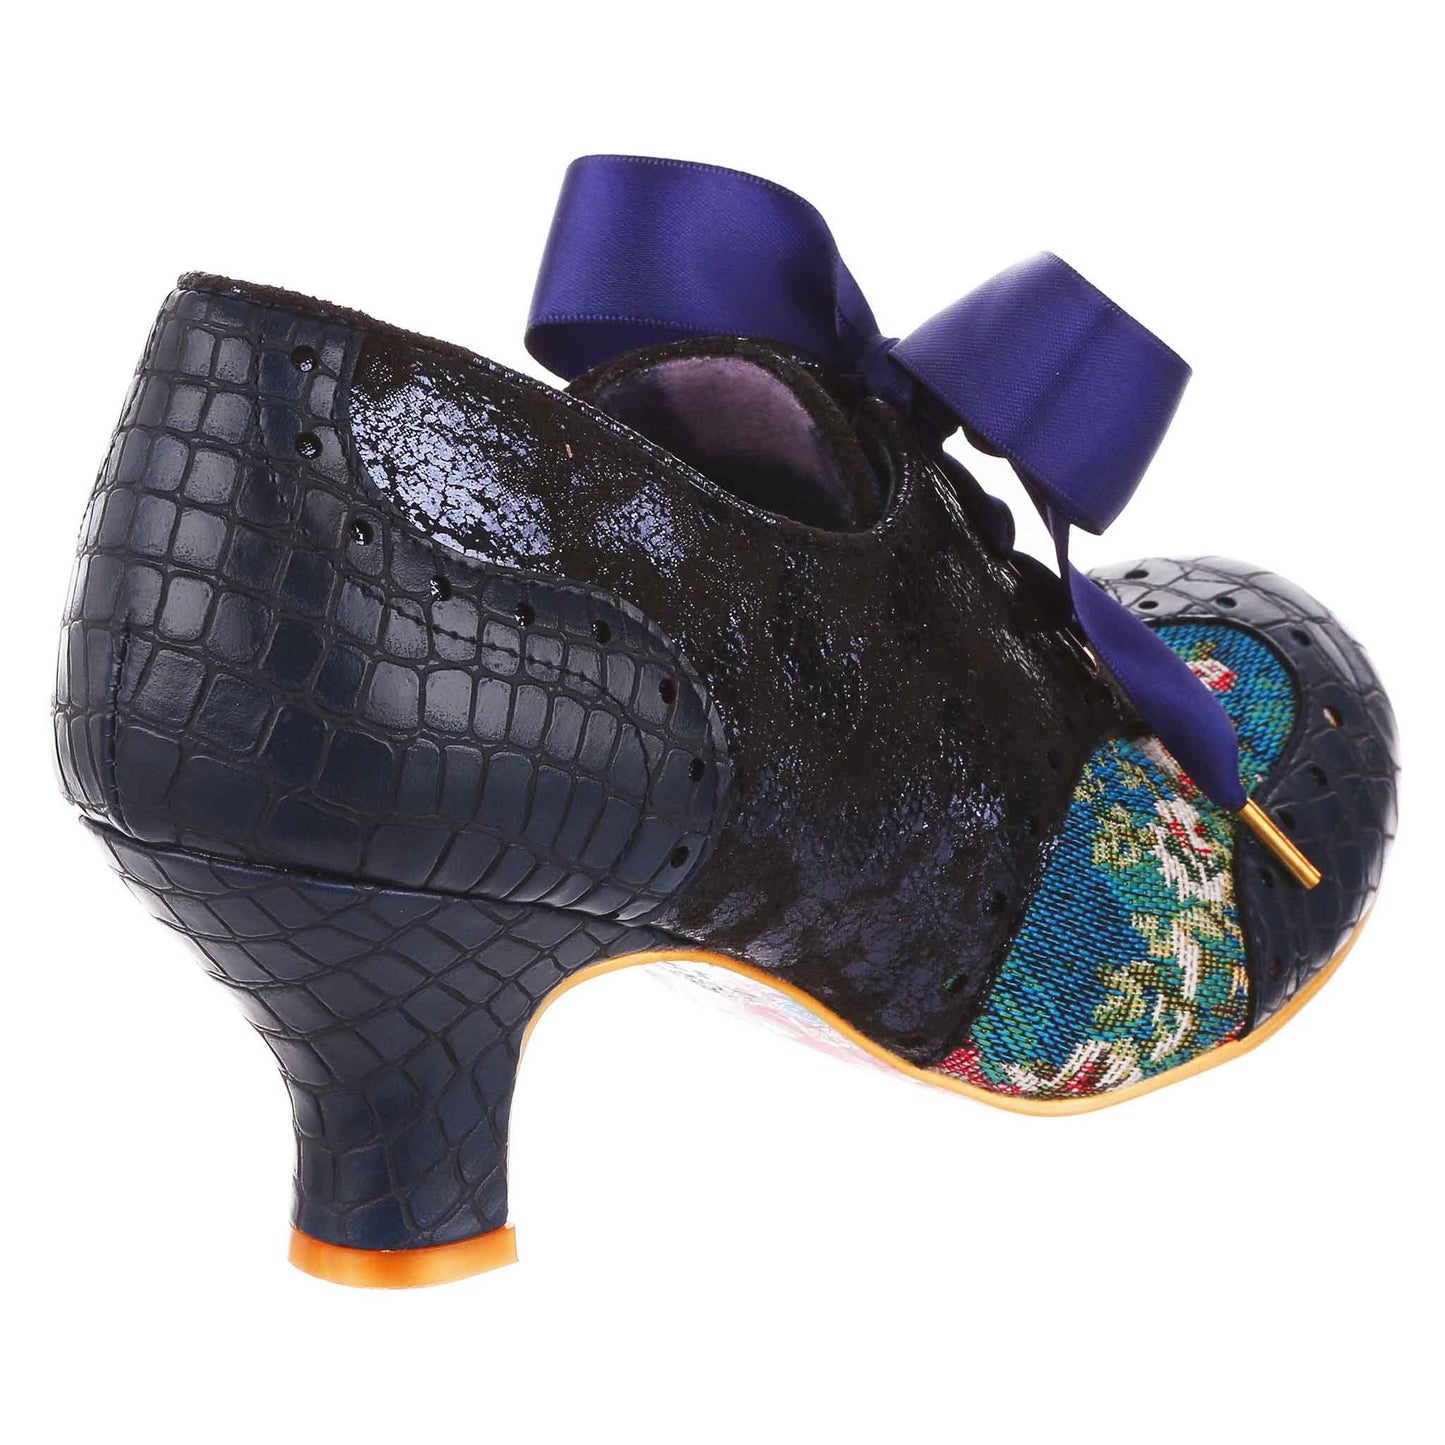 Irregular Choice Women's 4136-82 Cobbles Lace-Up Heel Shoes Blue Floral